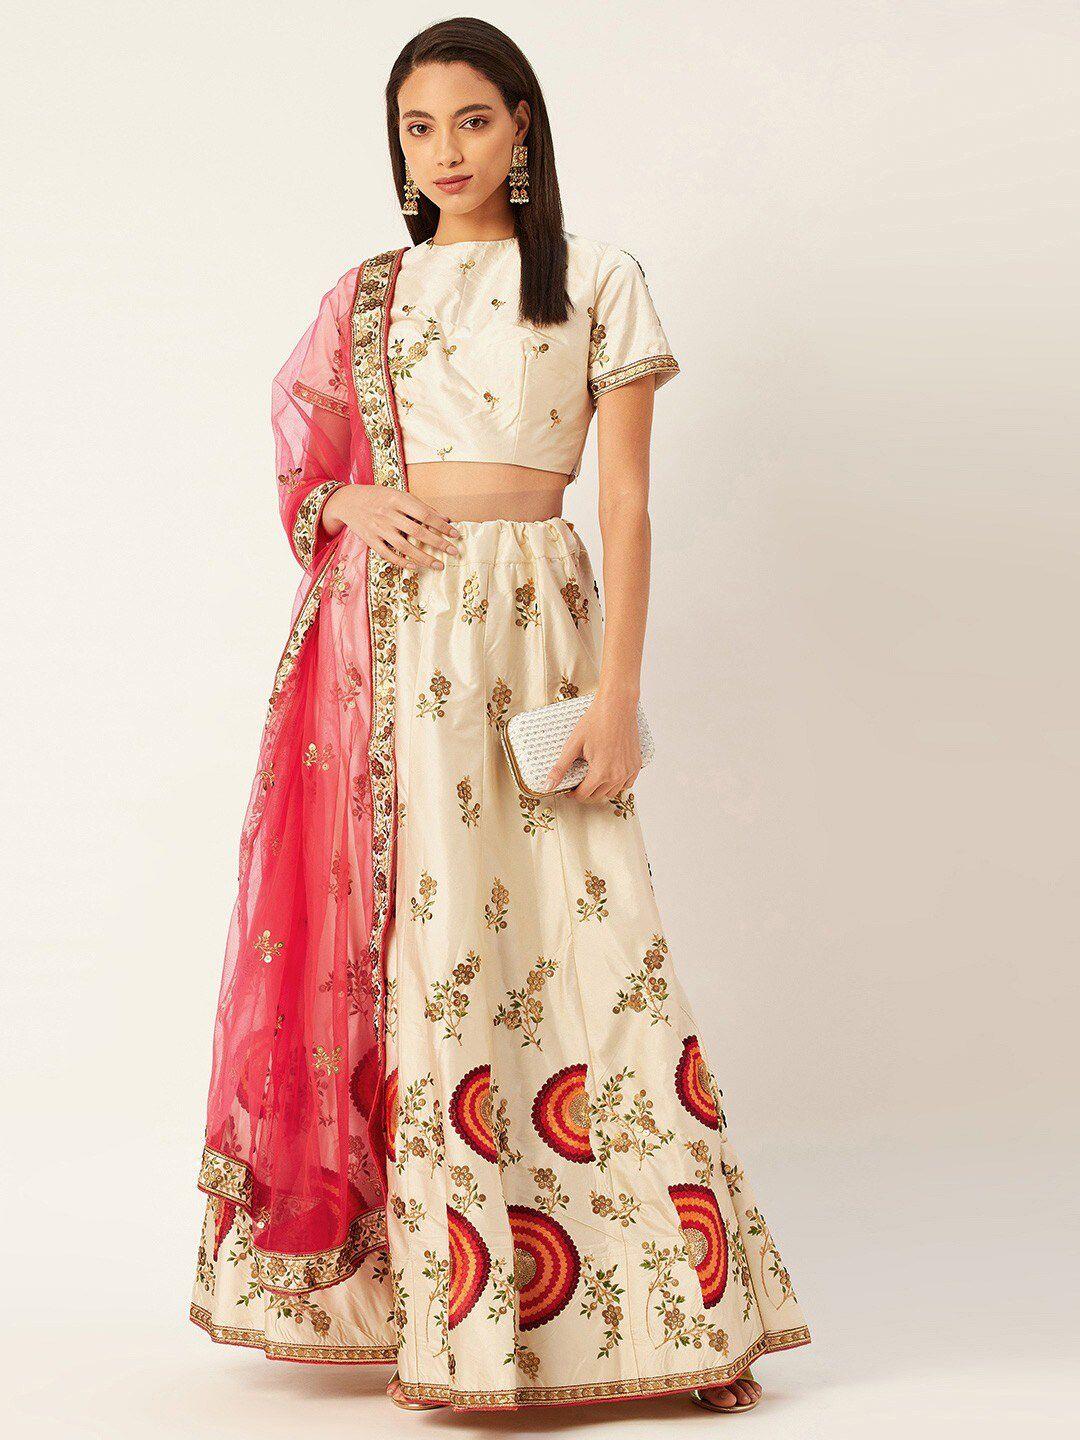 hritika embroidered thread work semi-stitched lehenga & blouse with dupatta